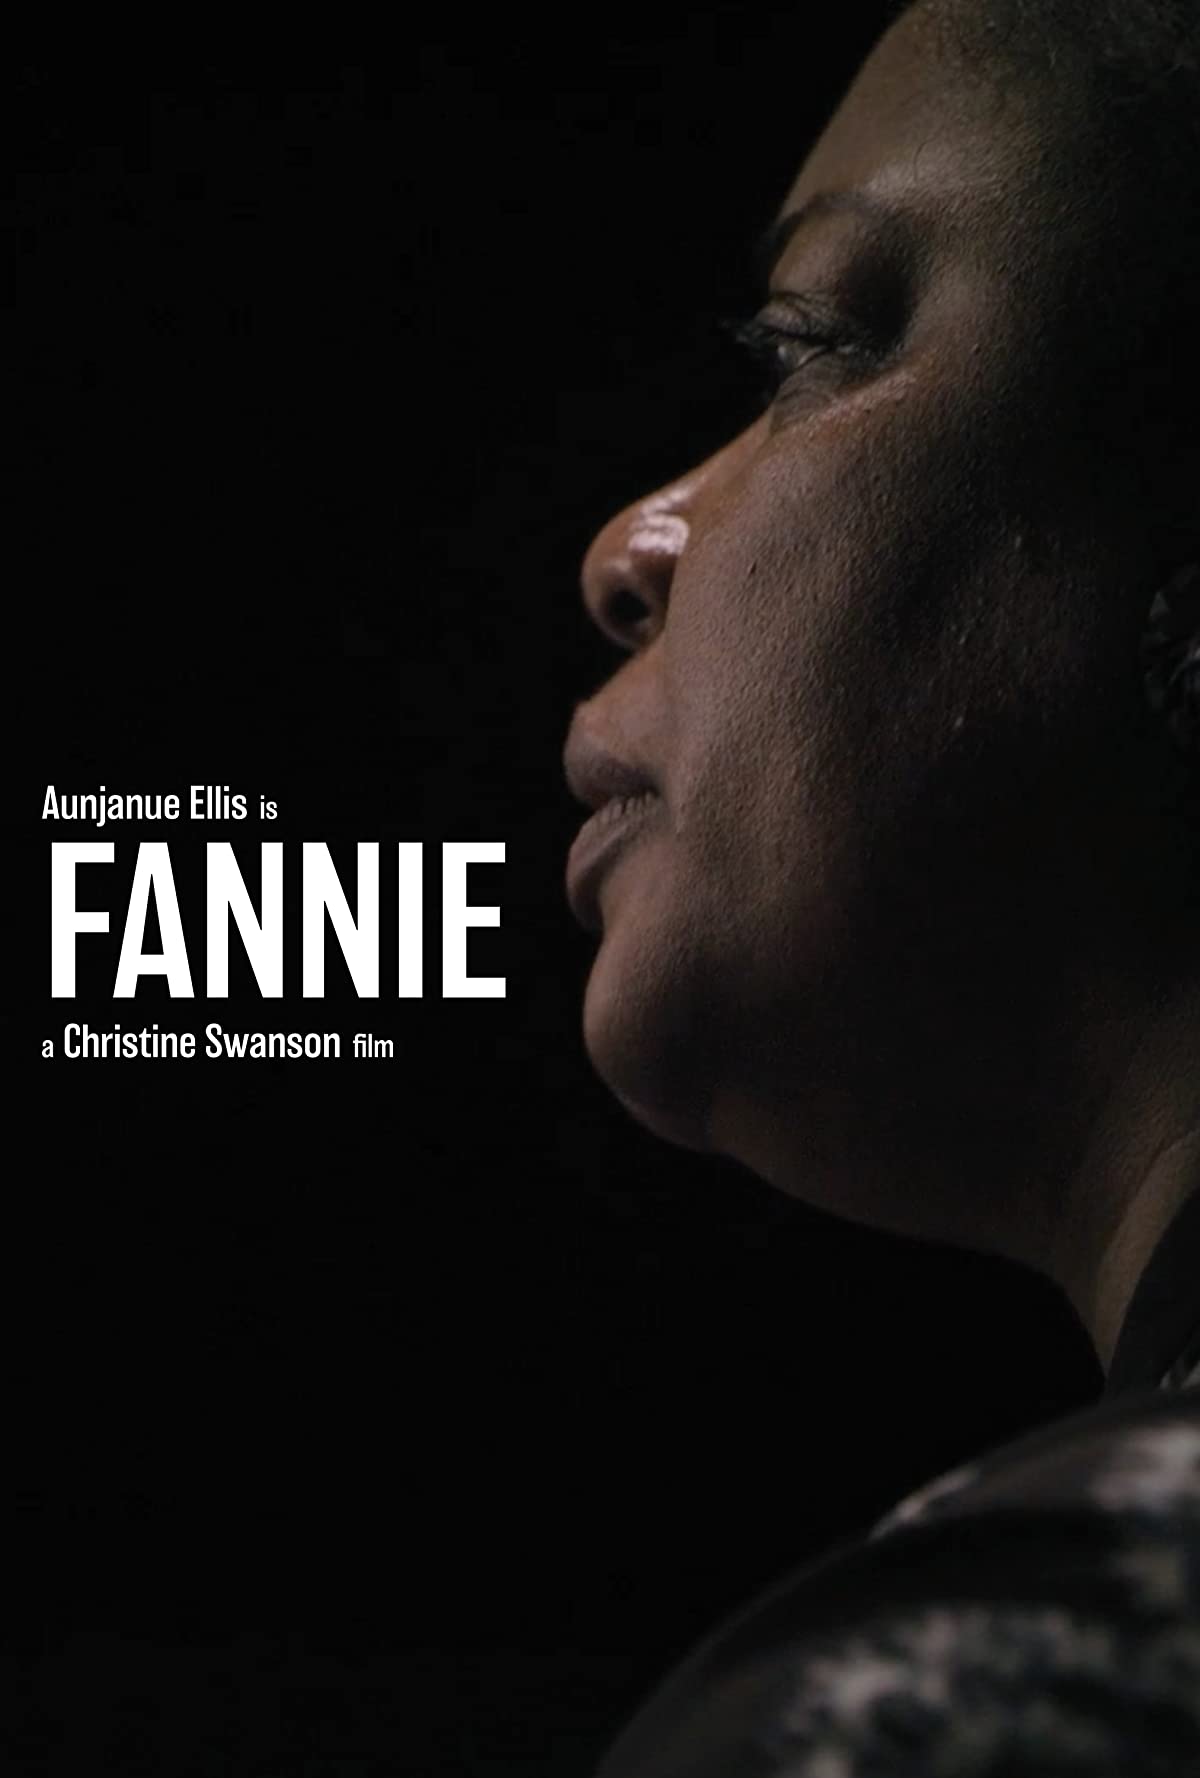 Watch Aunjanue Ellis' 'Fannie' Short Film